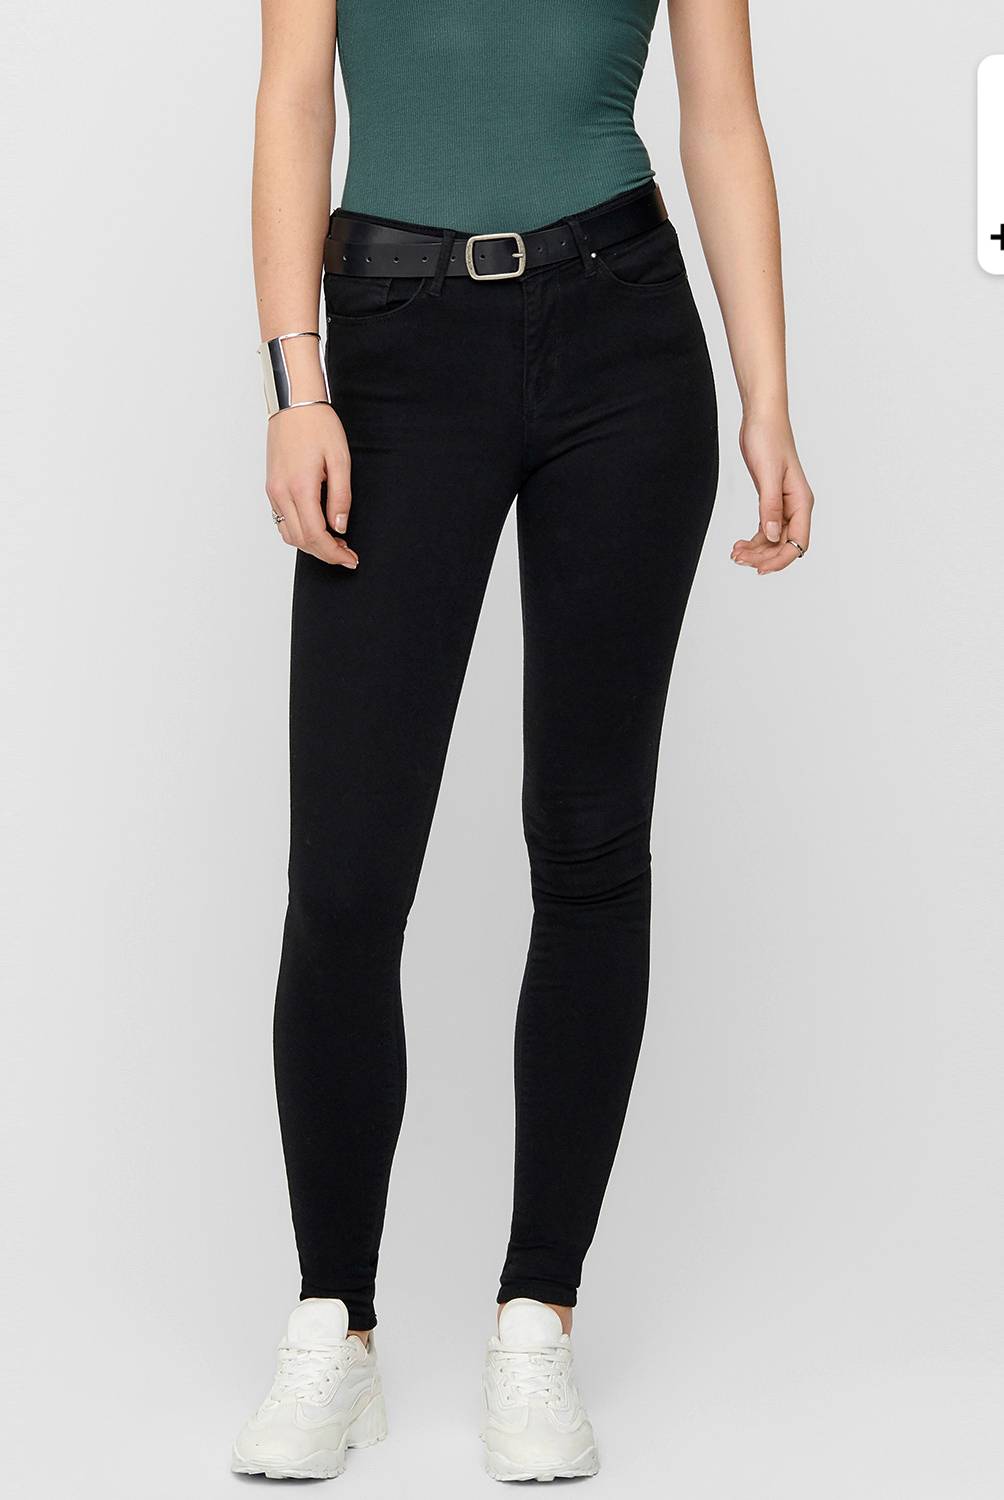 ONLY - Jeans de Algodón Skinny Mujer